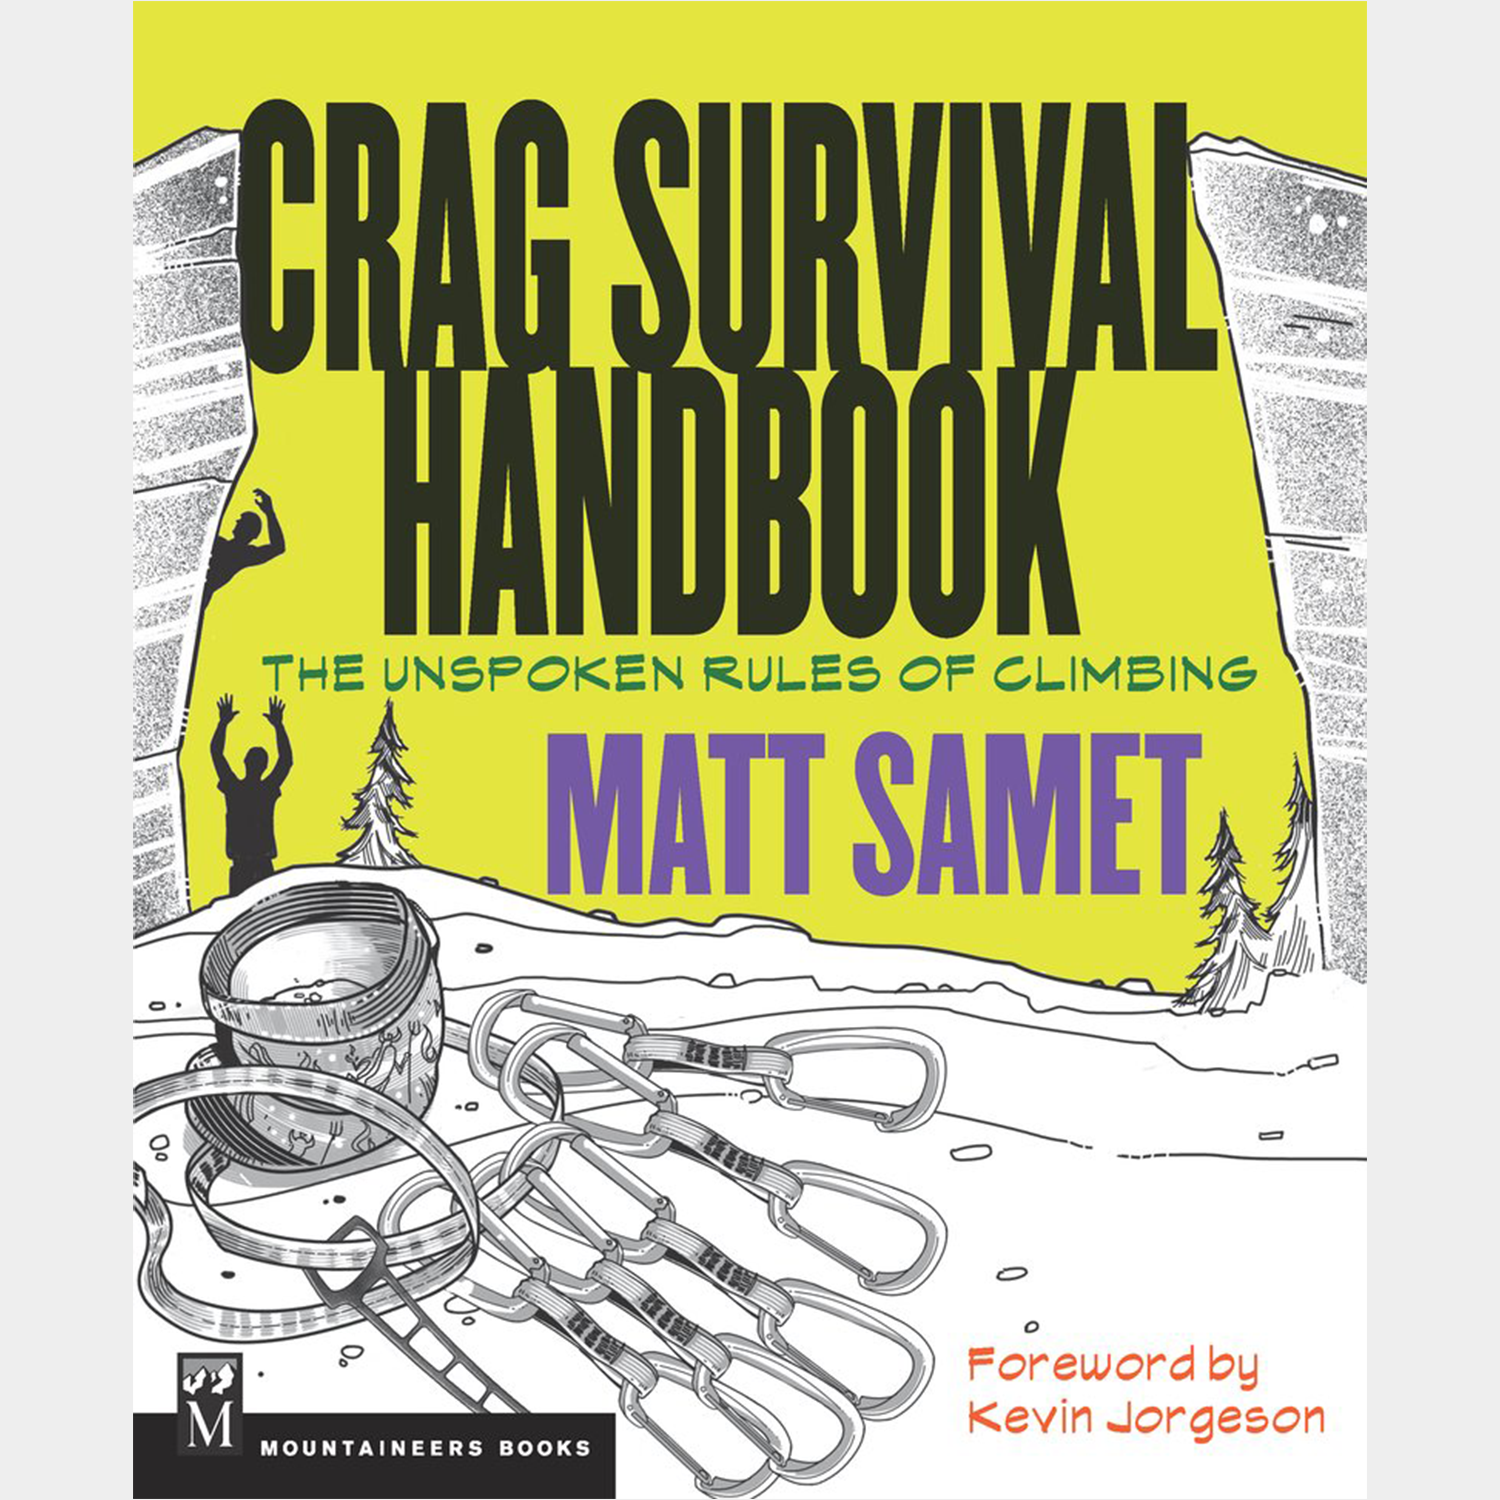 The Crag Survival Handbook : The Unspoken Rules of Climbing